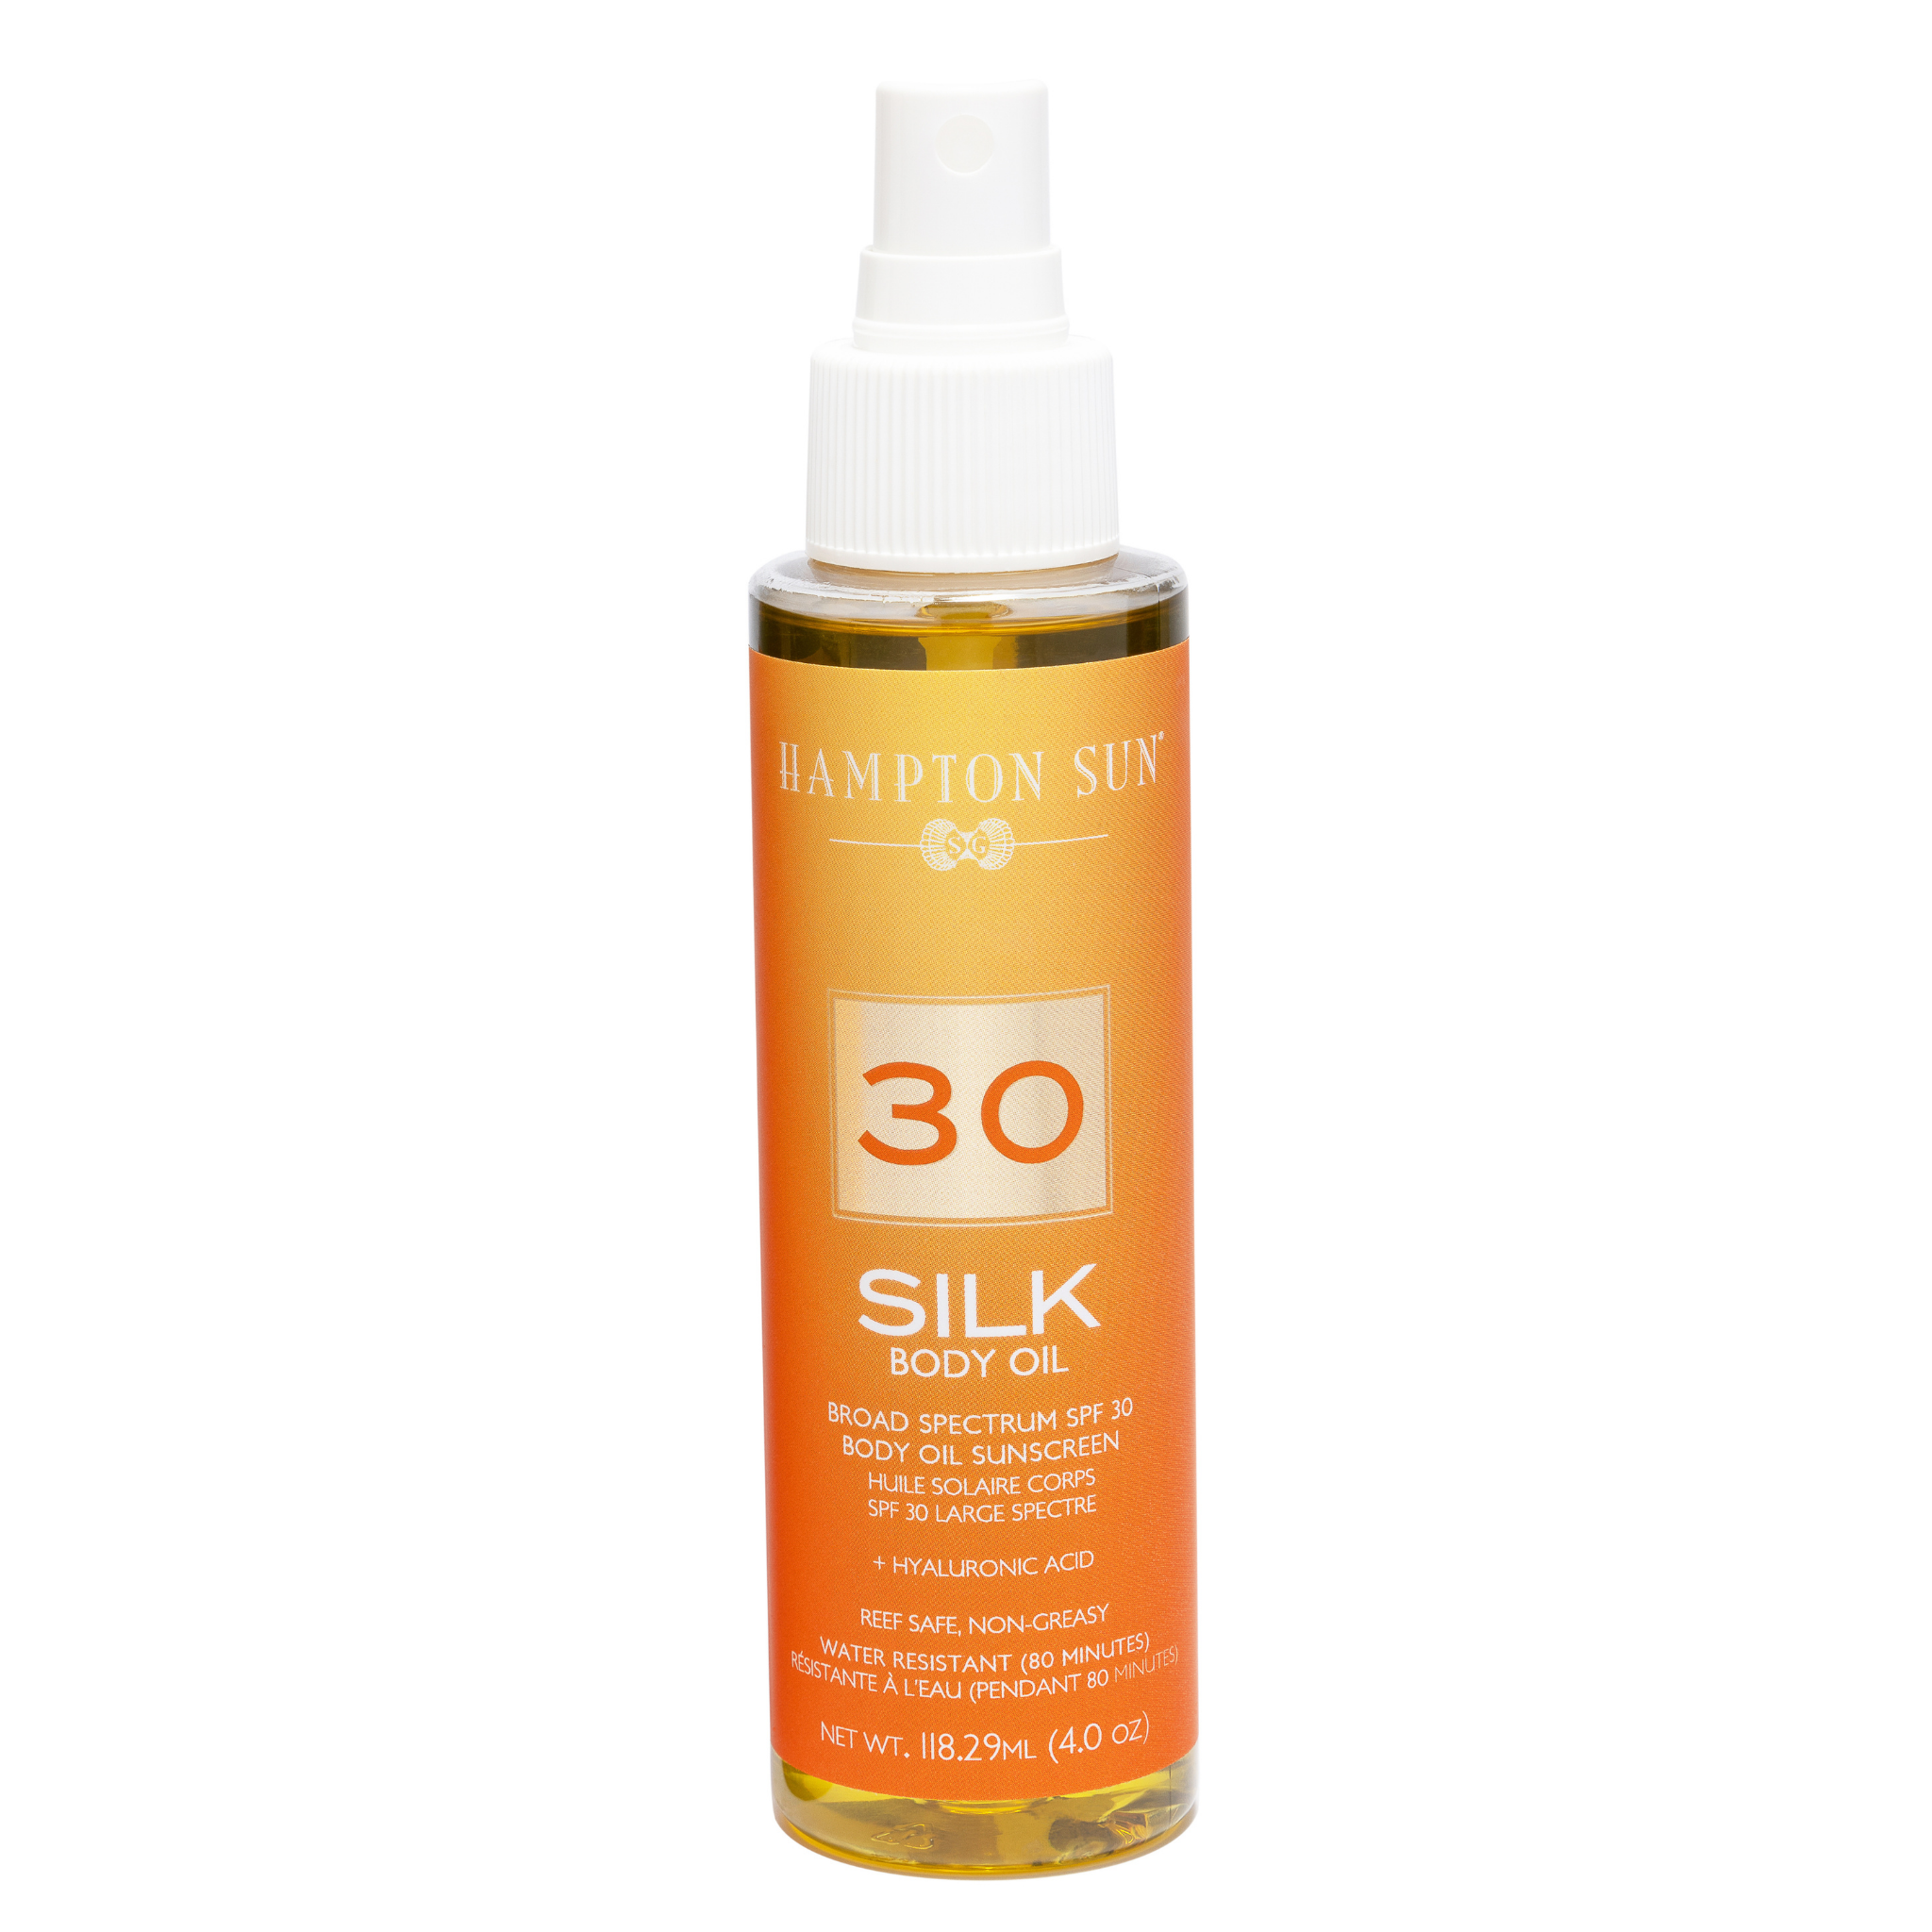 SILK Body Oil - SPF 30